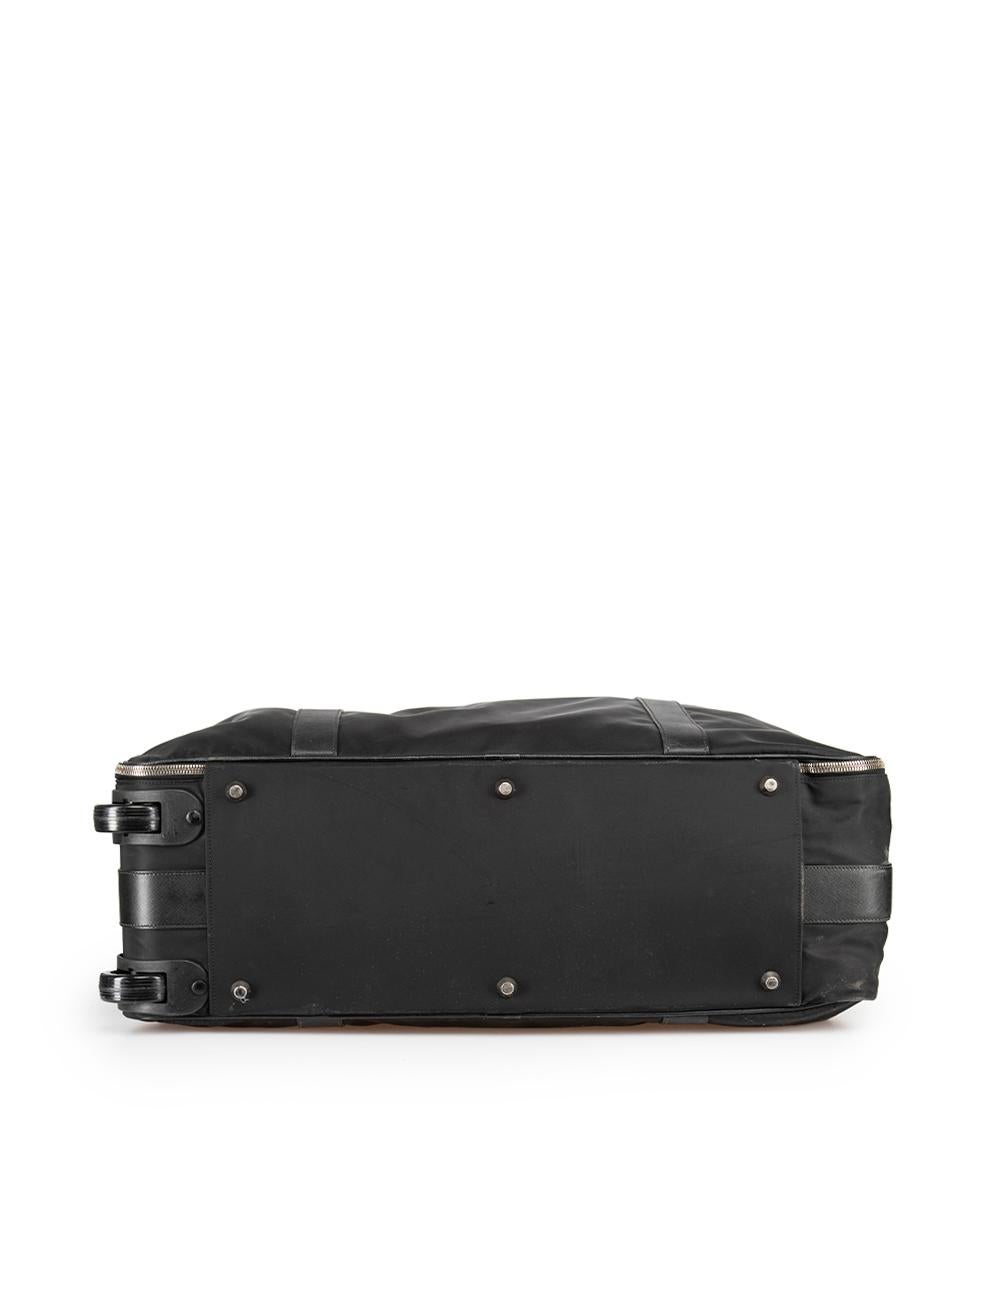 Women's Prada Black Nylon Semi-Rigid Wheeled Suitcase For Sale